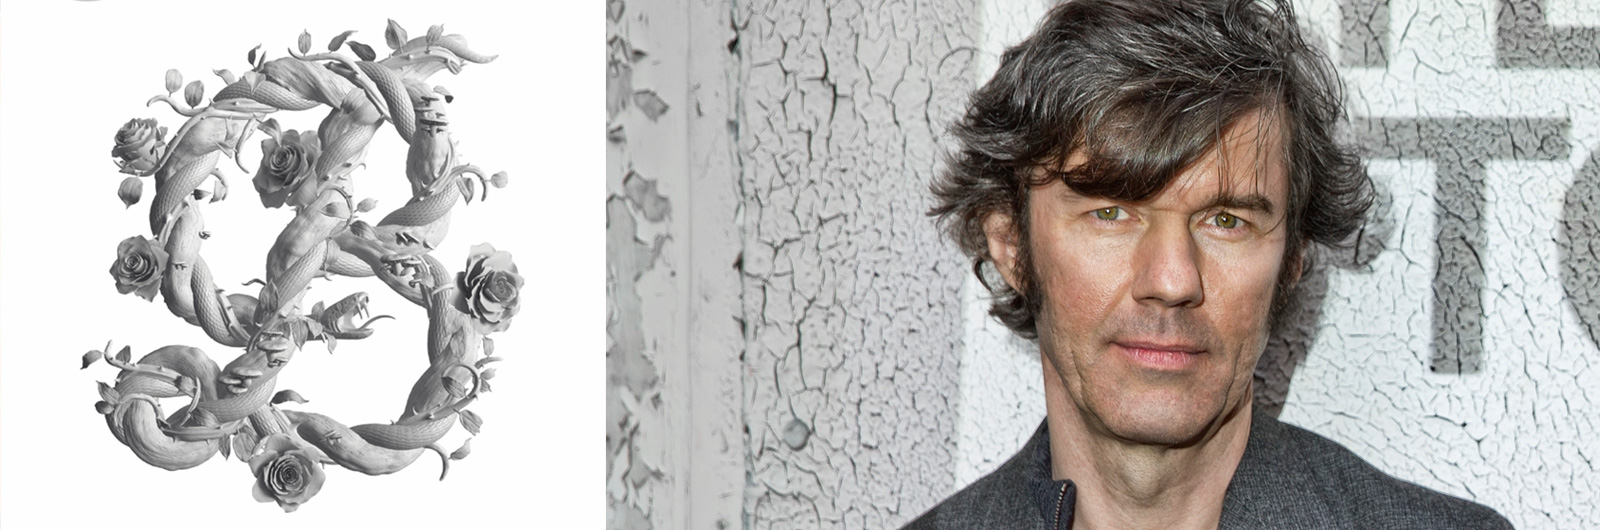 Stefan Sagmeister: The Power of Beauty